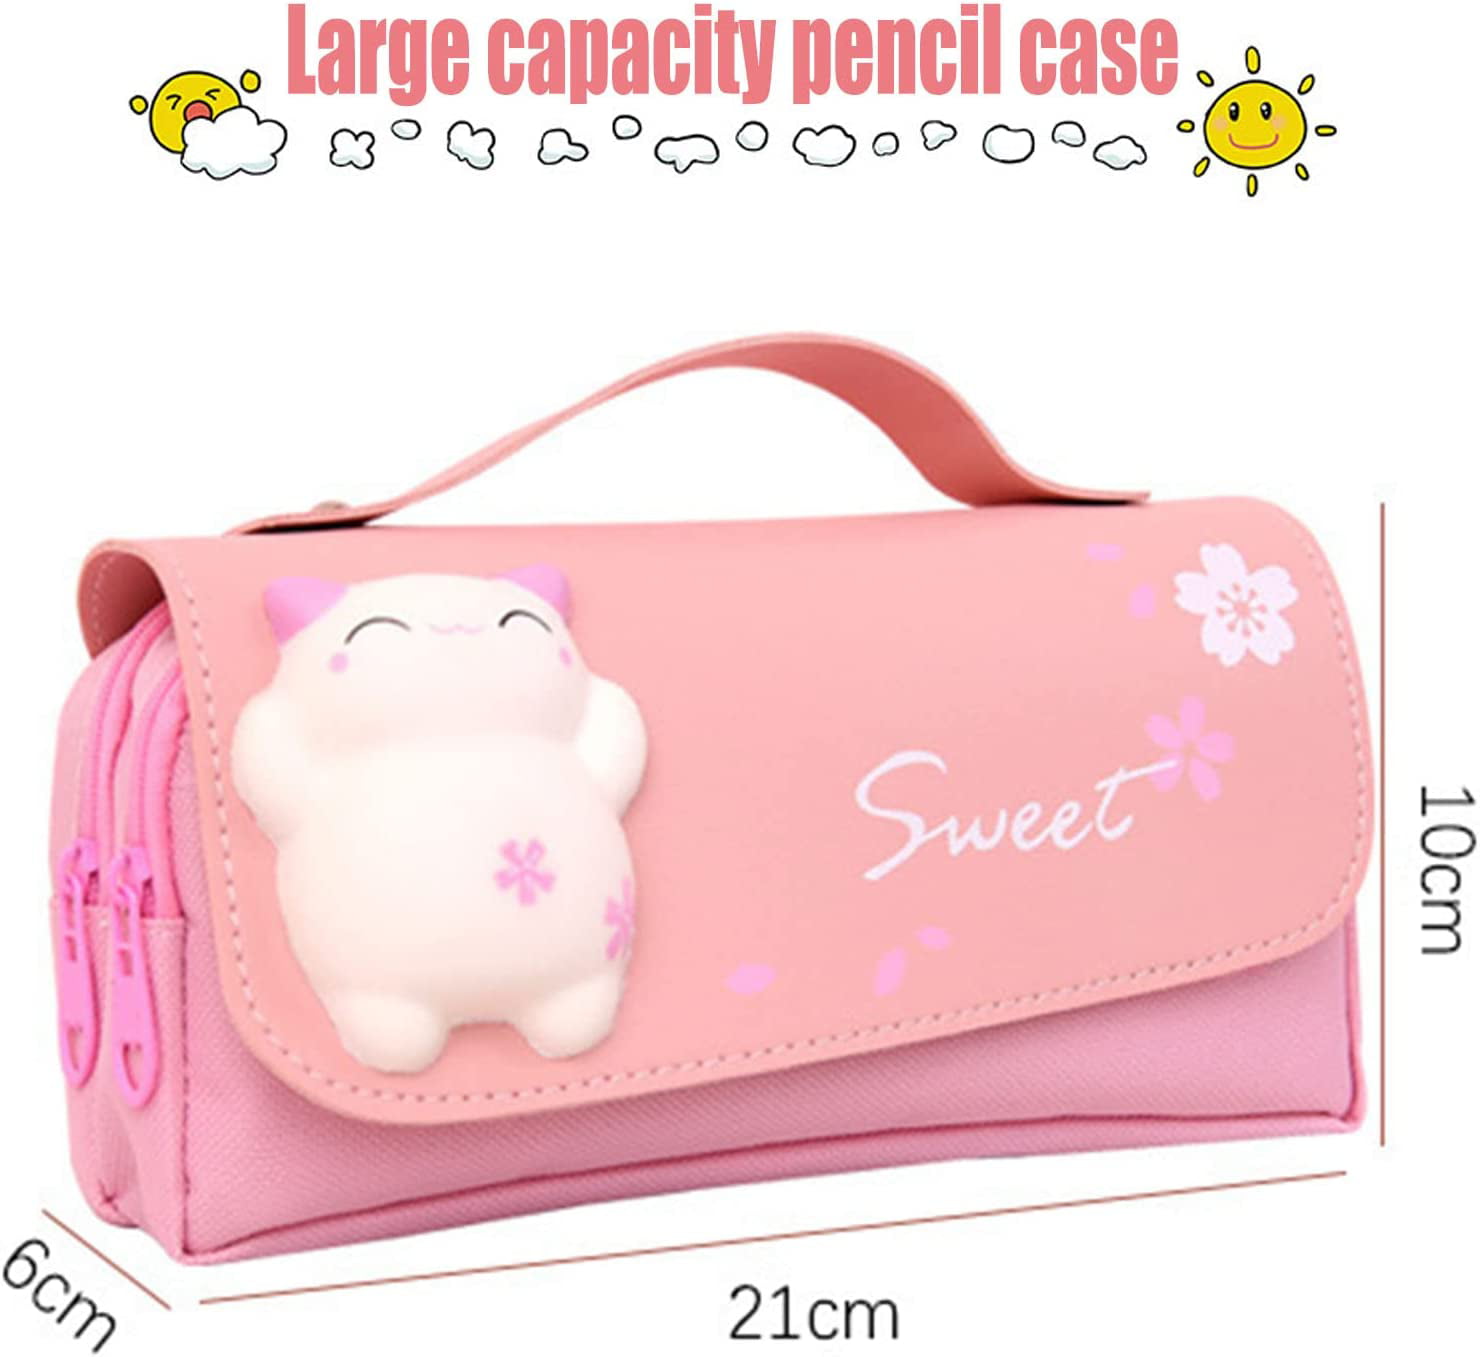 Danceemangoos Danceemangoo Pencil Bag Cute Strawberry Pattern Pencil Case Cartoon Pink Pencil Bag with Bow School Stationery Supplies (White Heart)